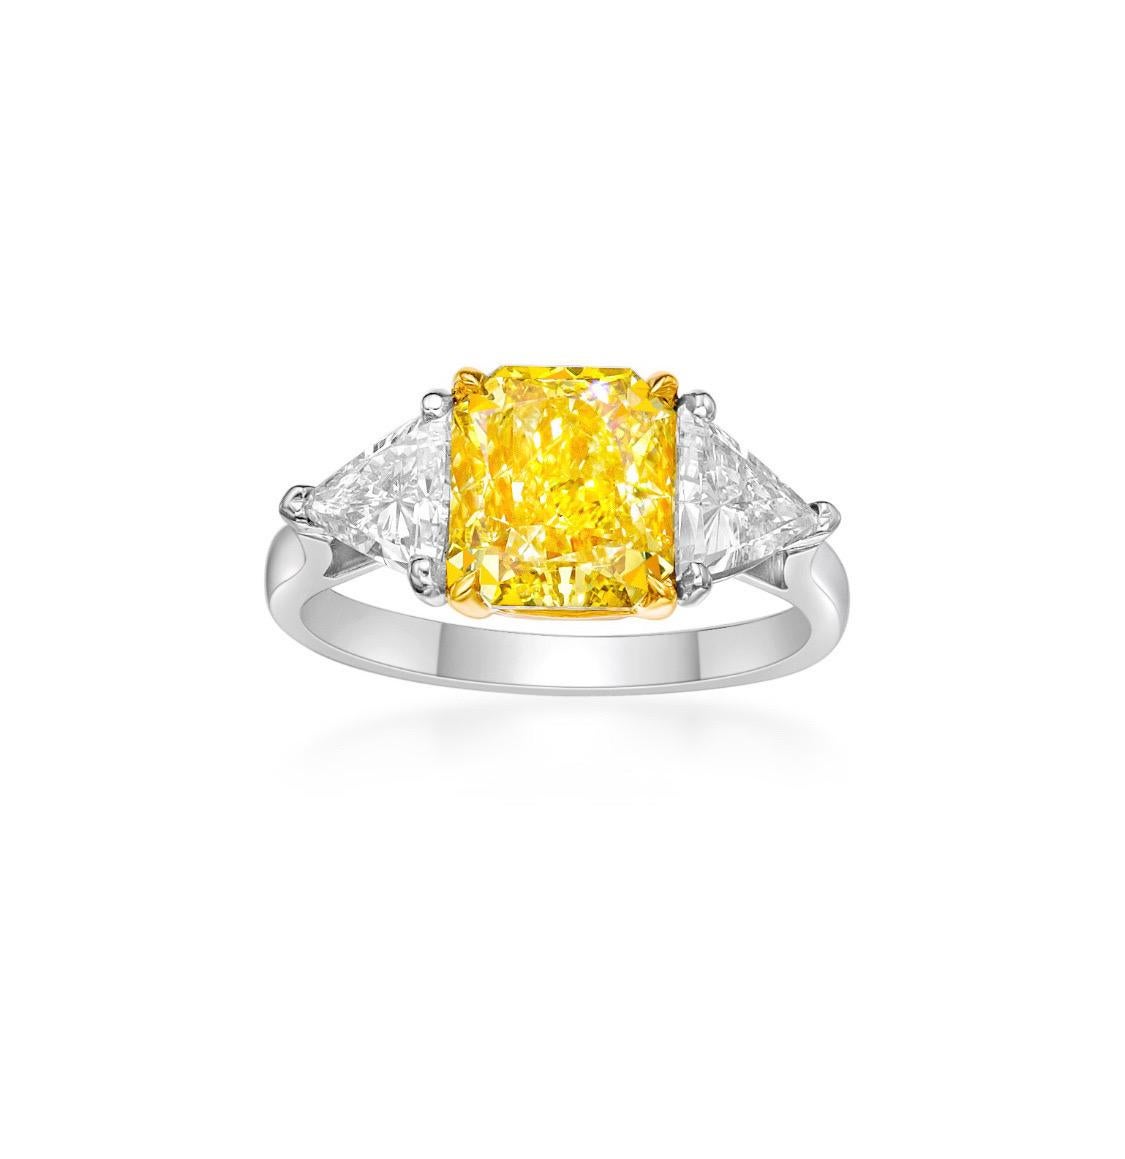 Radiant Cut Emilio Jewelry Gia Certified 3.00 Carat Fancy Vivid Yellow Diamond Ring   For Sale